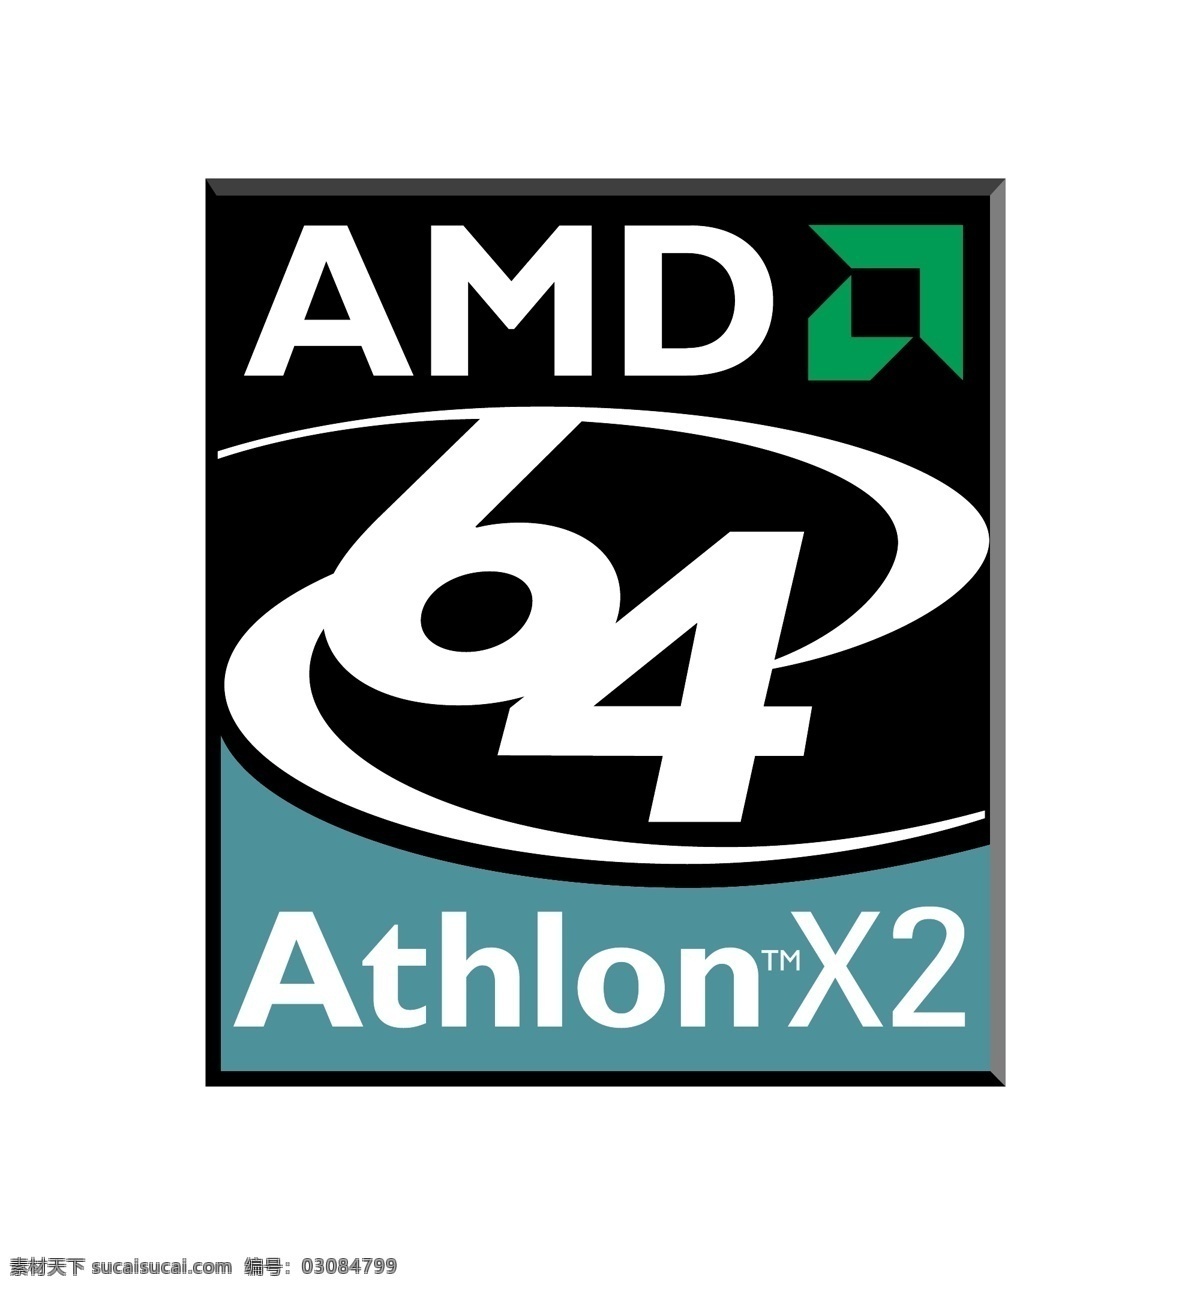 amd 速龙 x2 免费的amd athlon x2标志64 标志 免费 psd源文件 logo设计